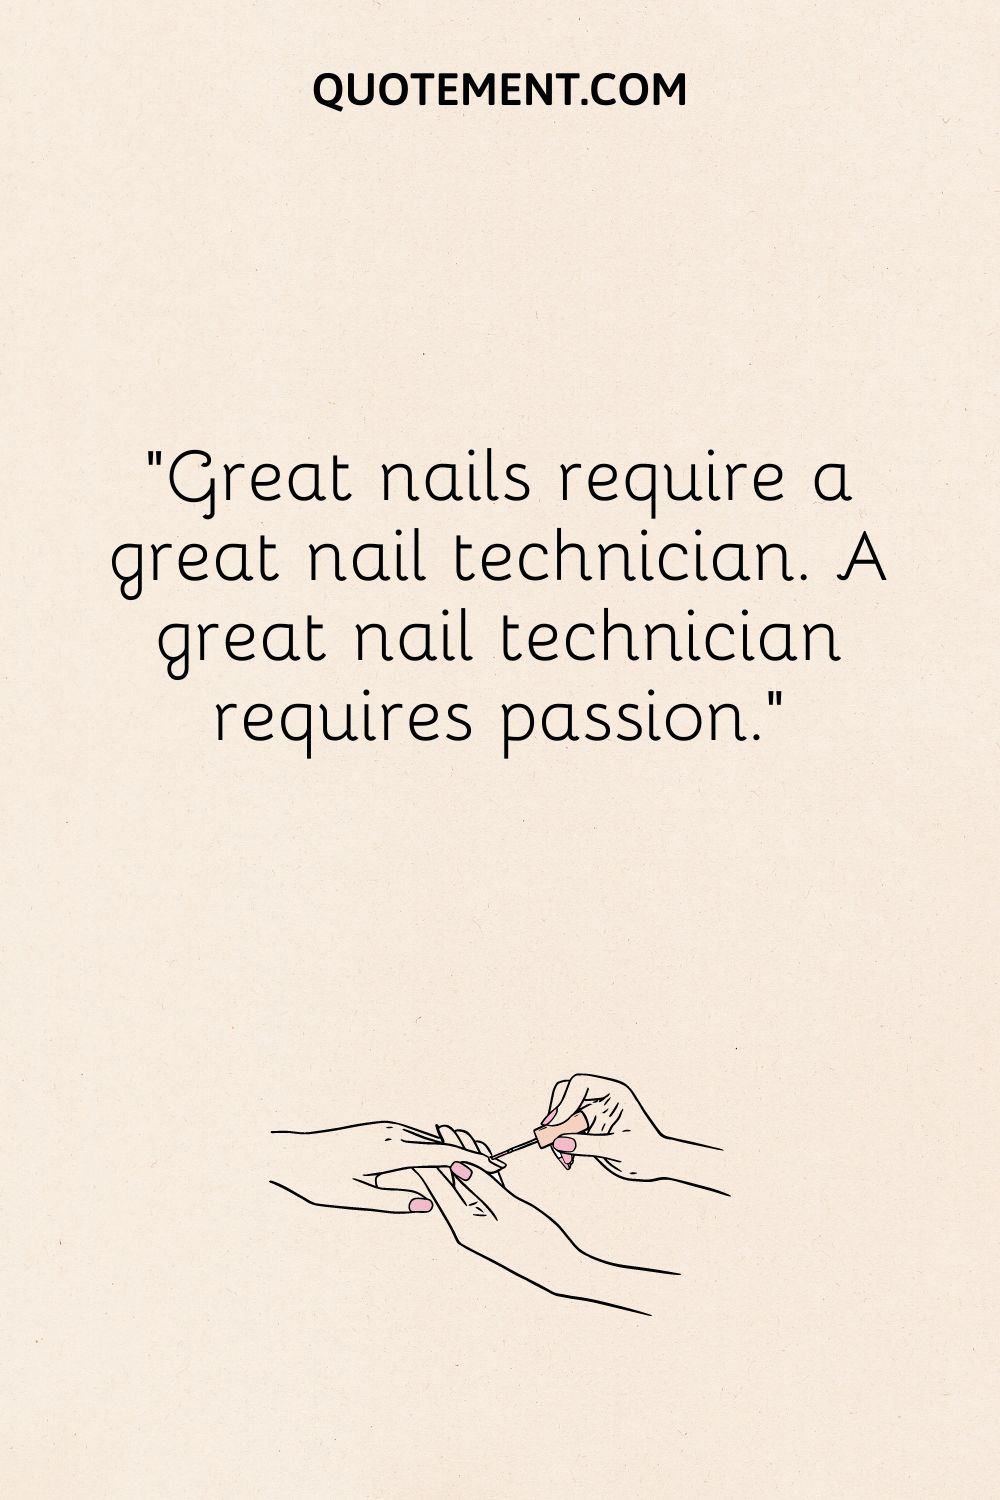 nail painting illustration representing nail tech quote